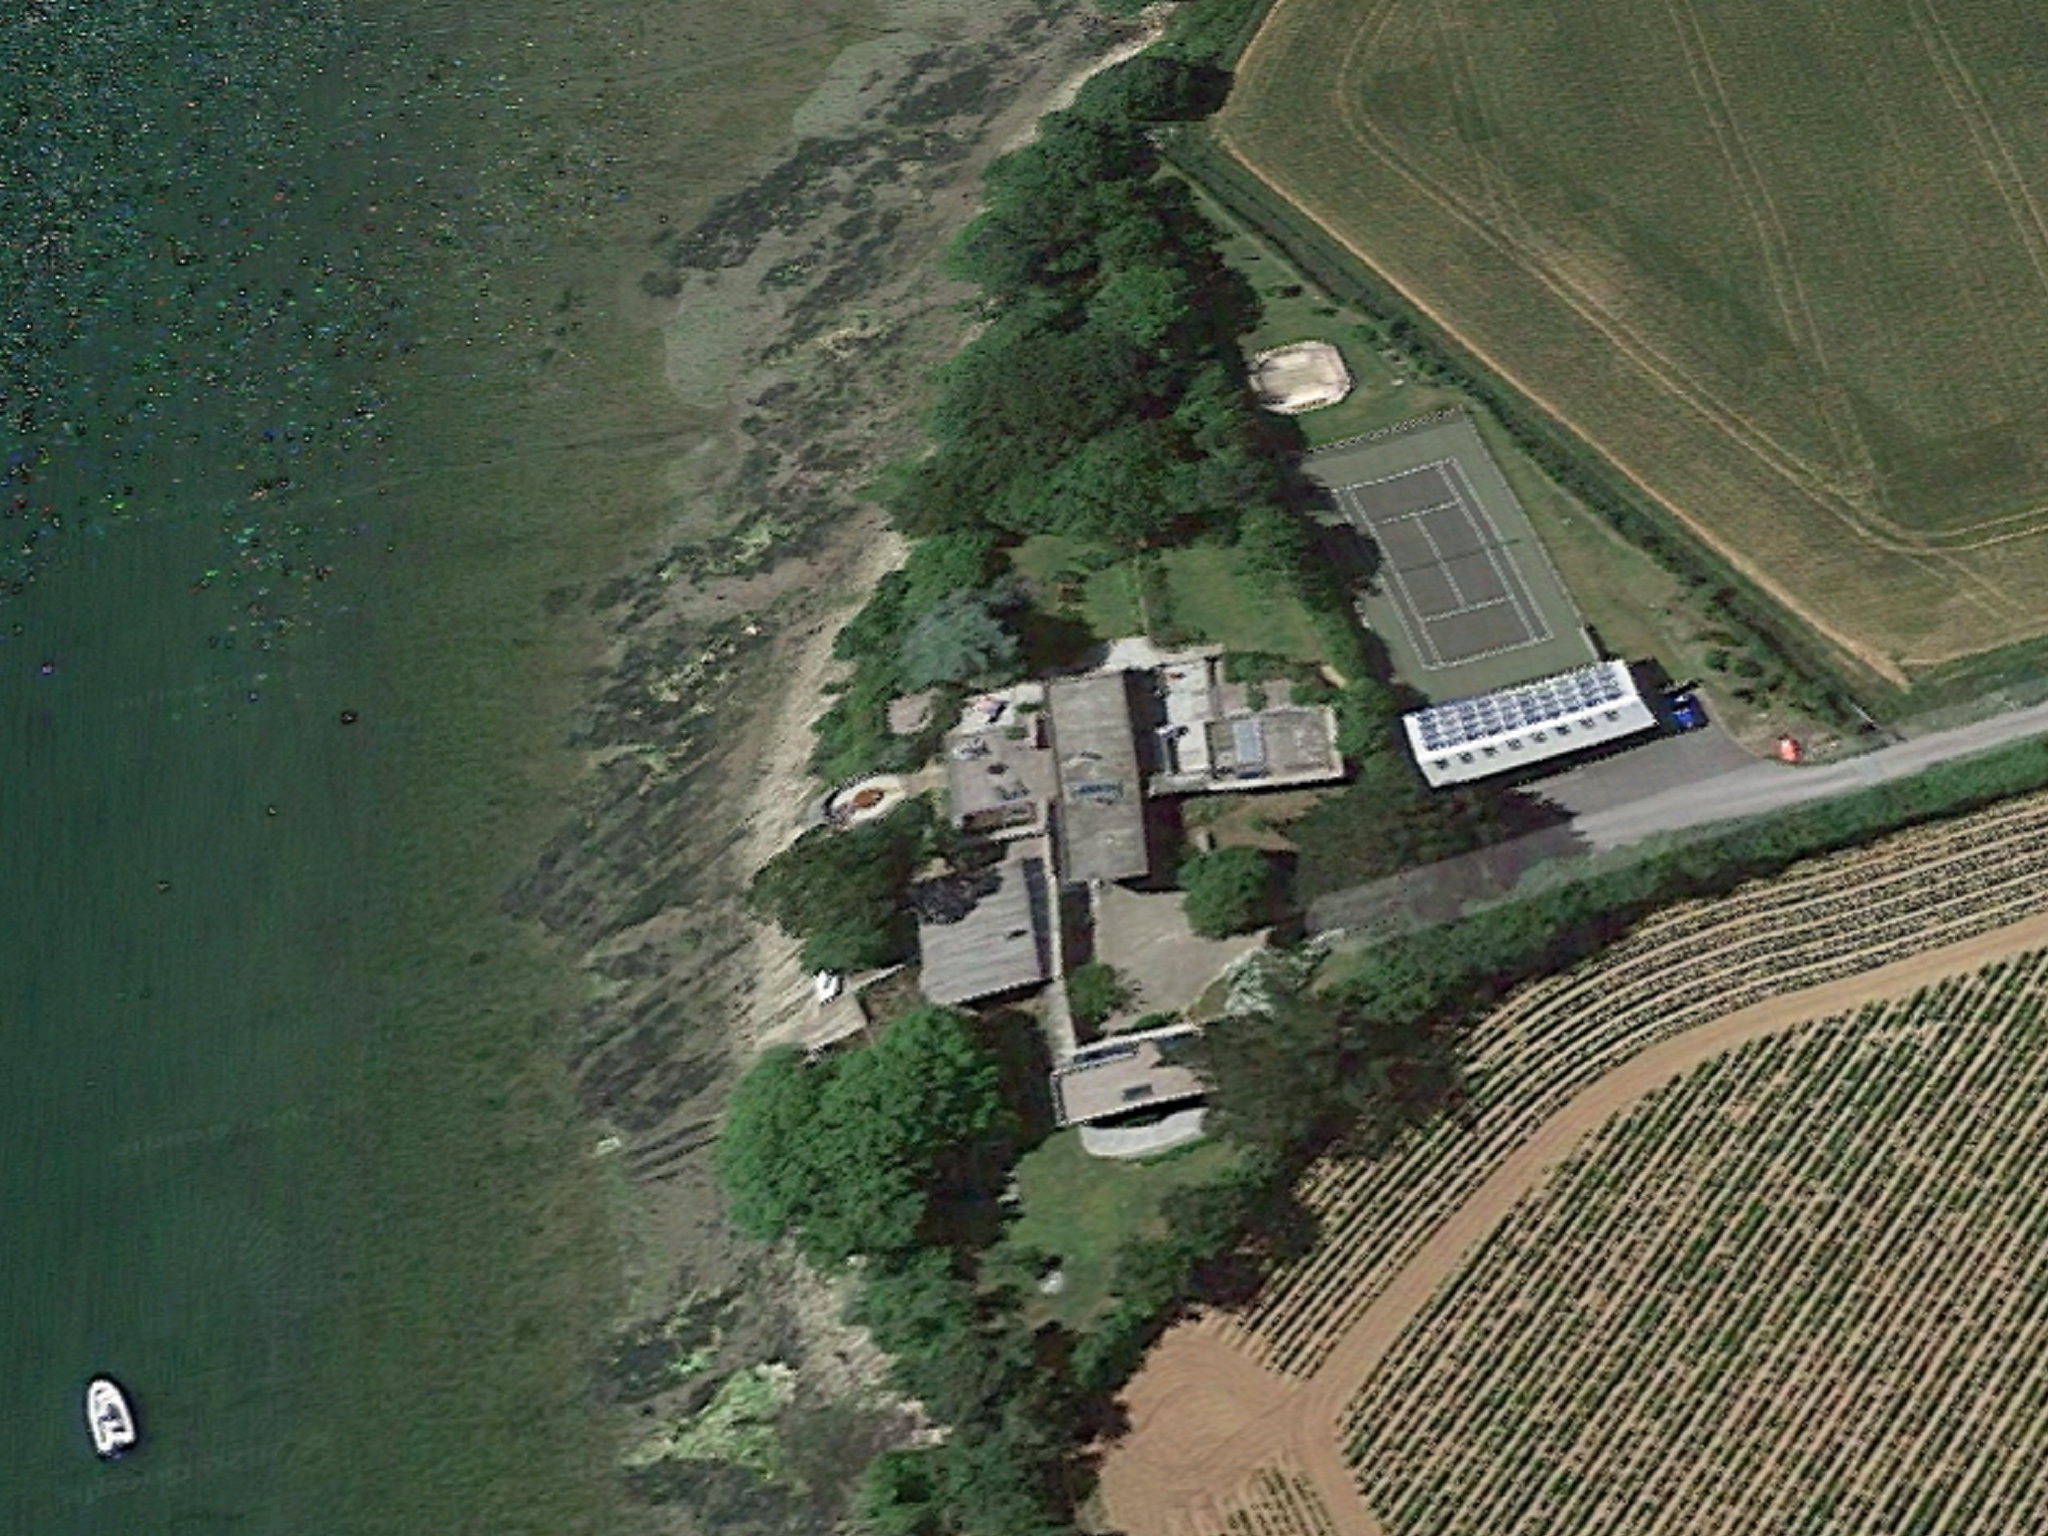 Google Earth view image of Gerston Point near Kingsbridge, in the South Hams, Devon.